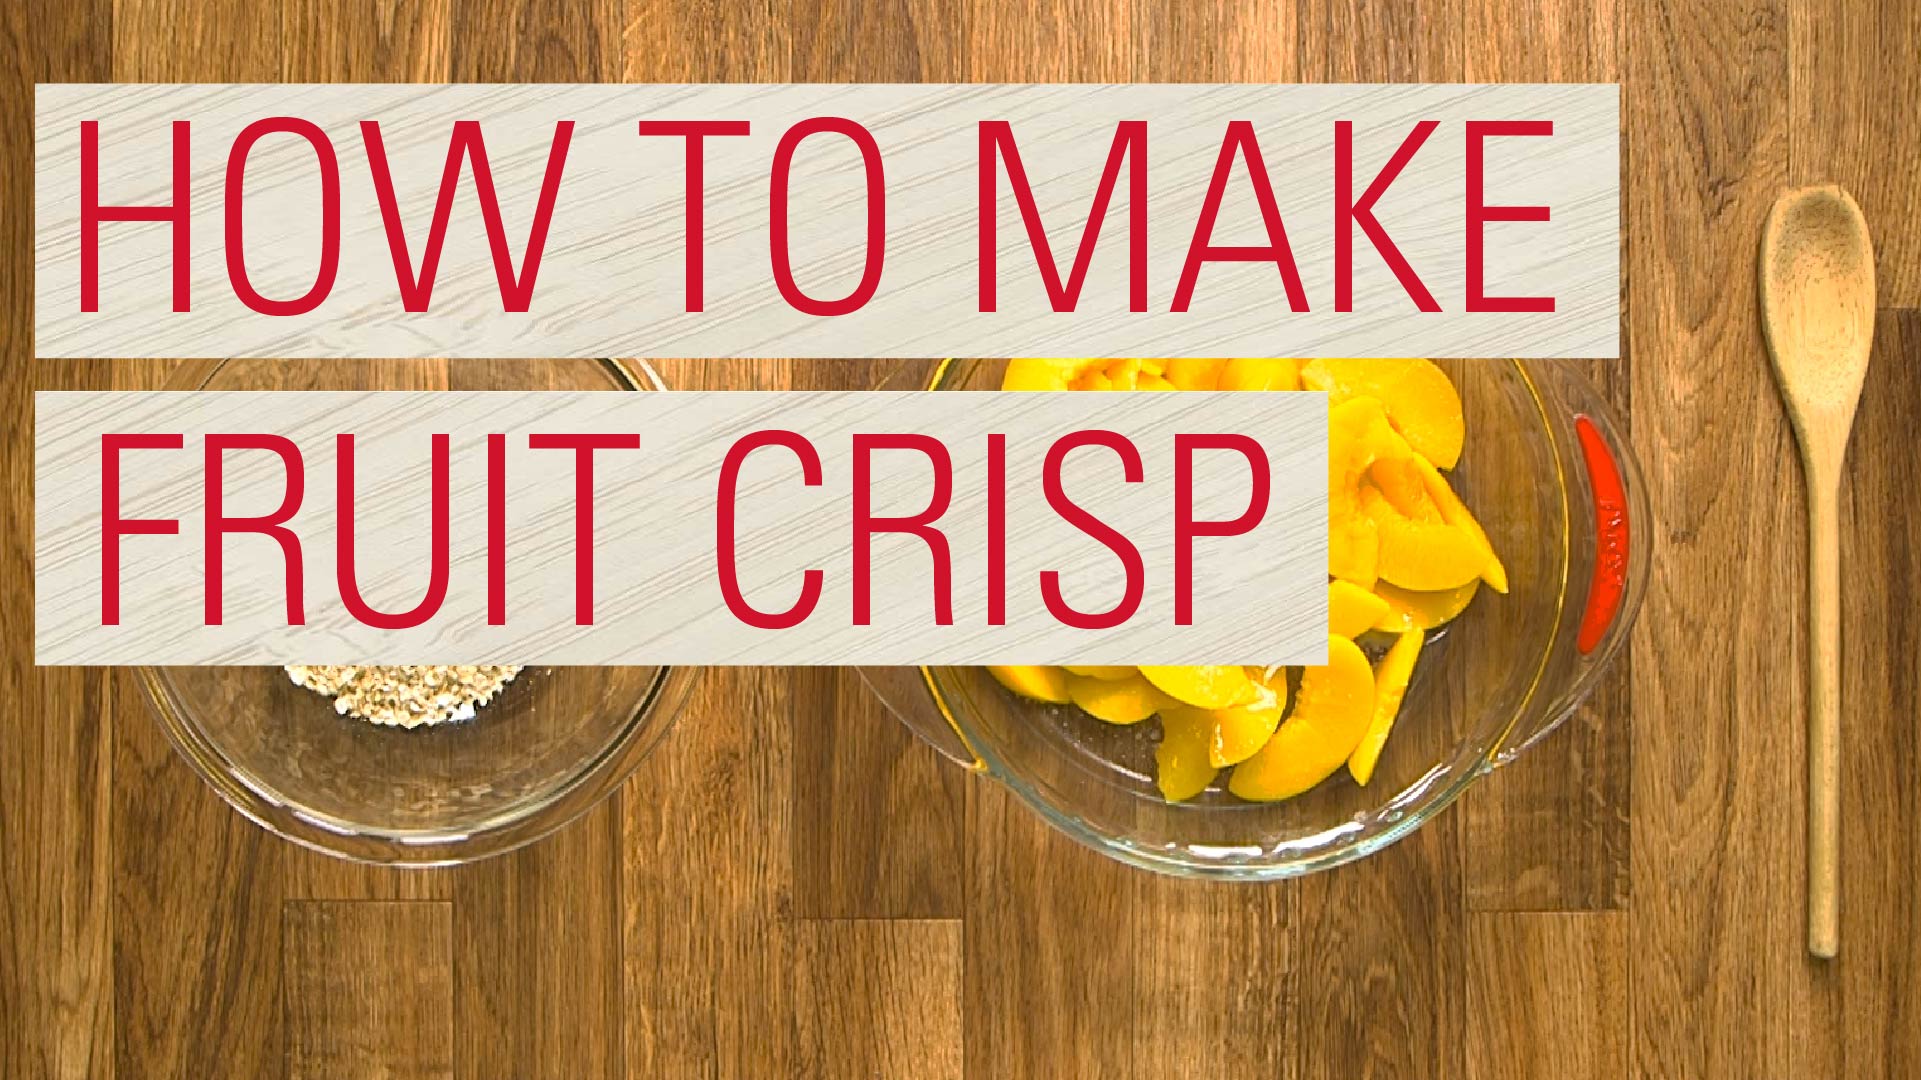 How to make fruit crisp